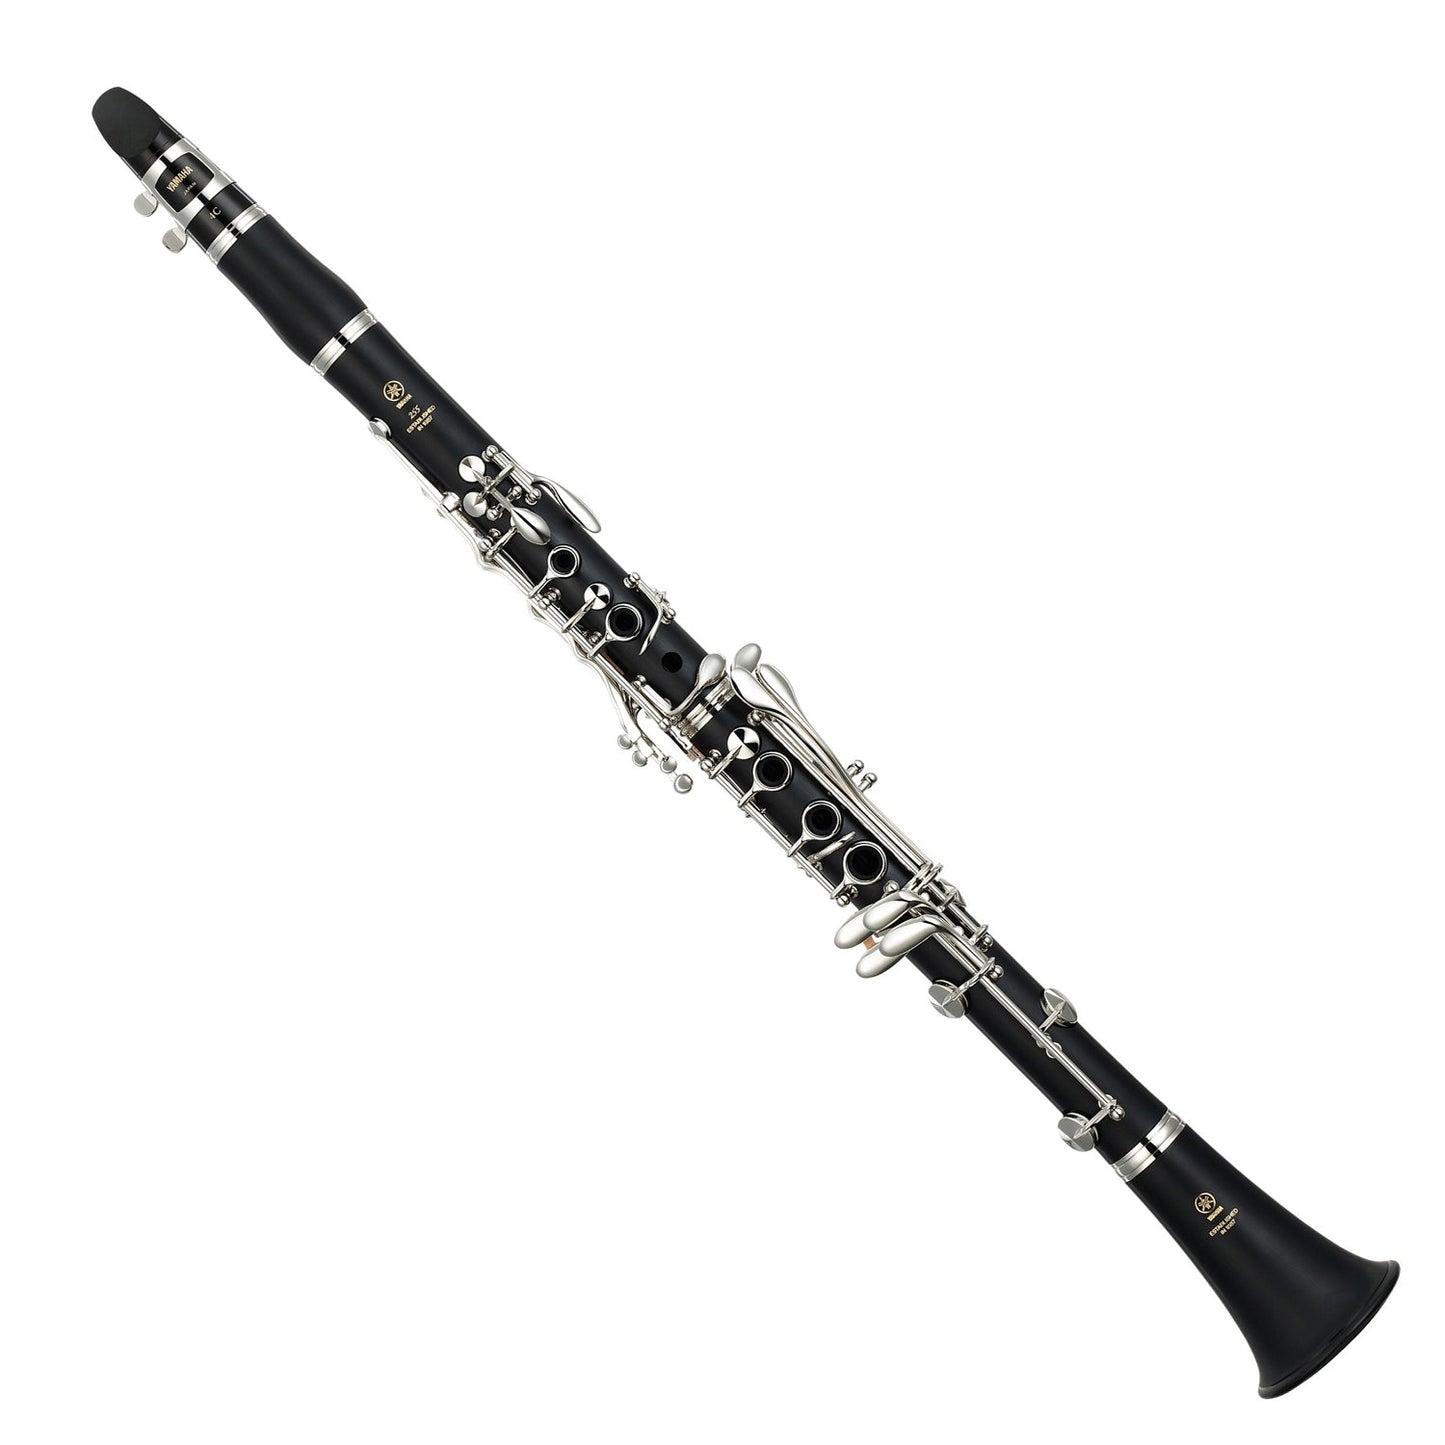 Yamaha Clarinet - Rental